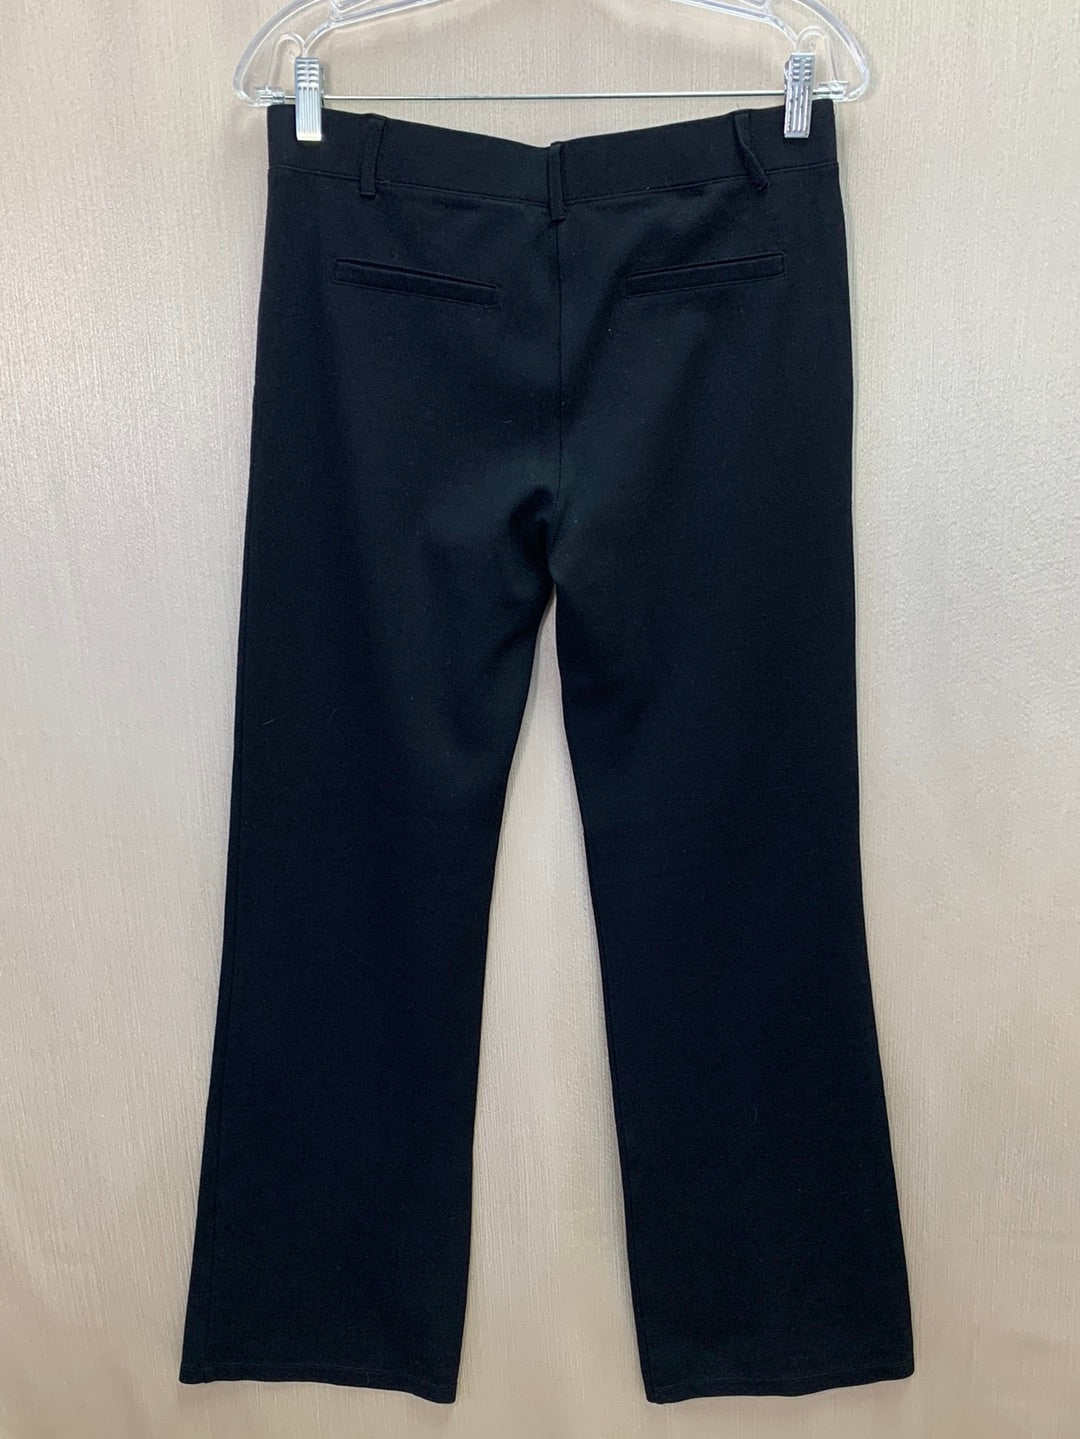 BETABRAND black shimmer Classic Bootcut Dress Yoga Pants - PM –  CommunityWorx Thrift Online